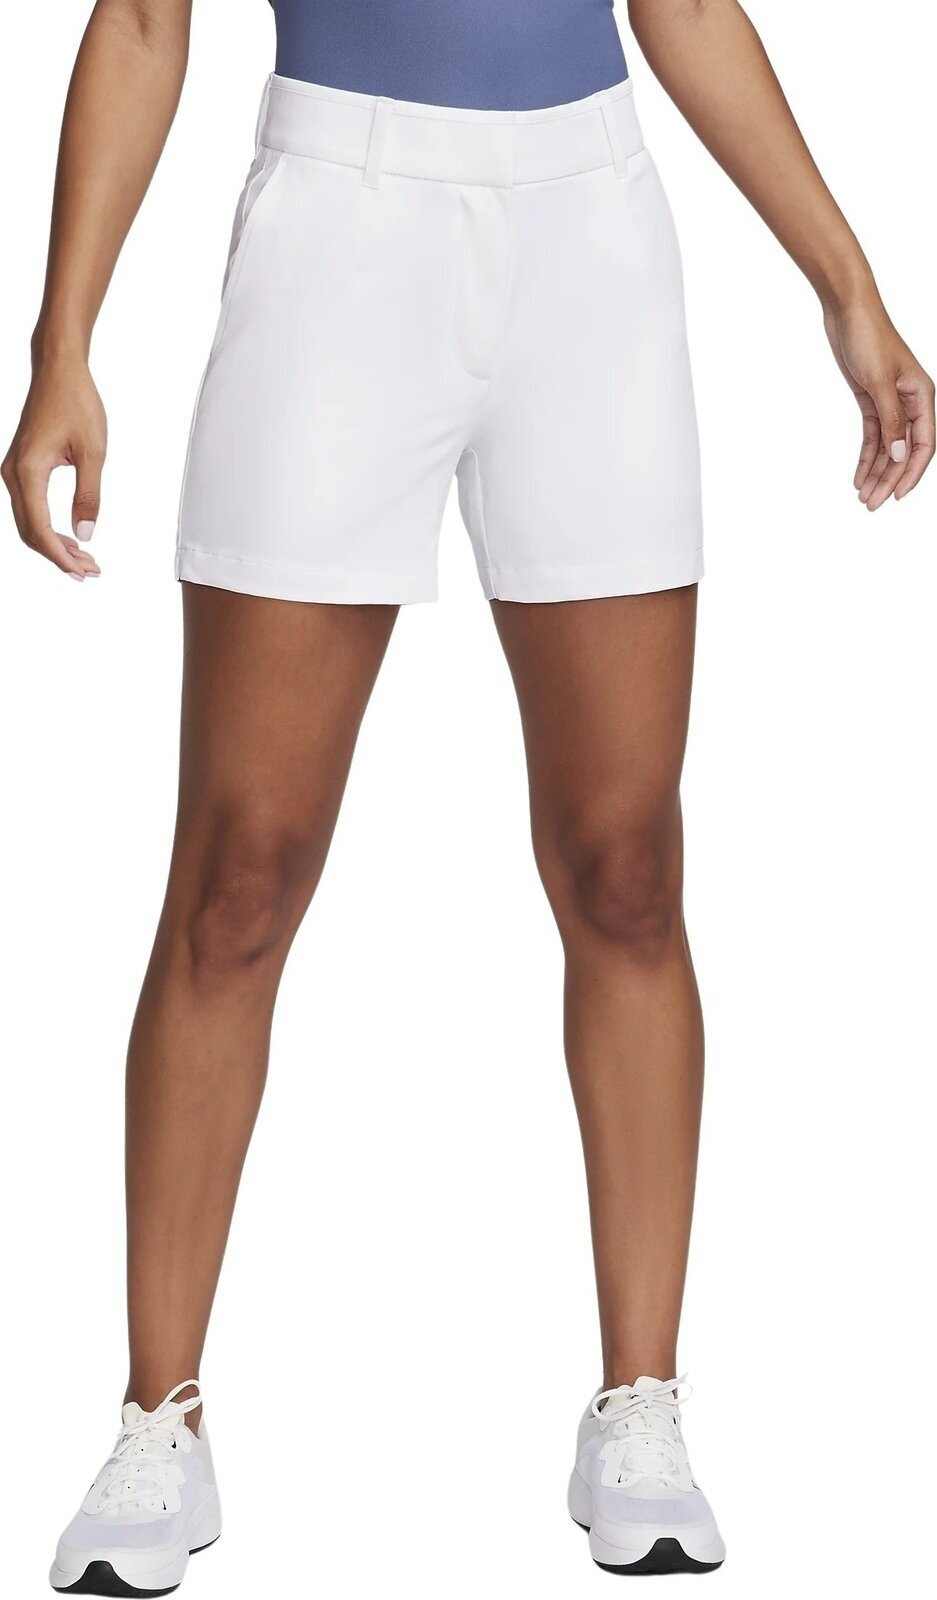 Sort Nike Dri-Fit Victory 5" Womens Shorts White/Black S